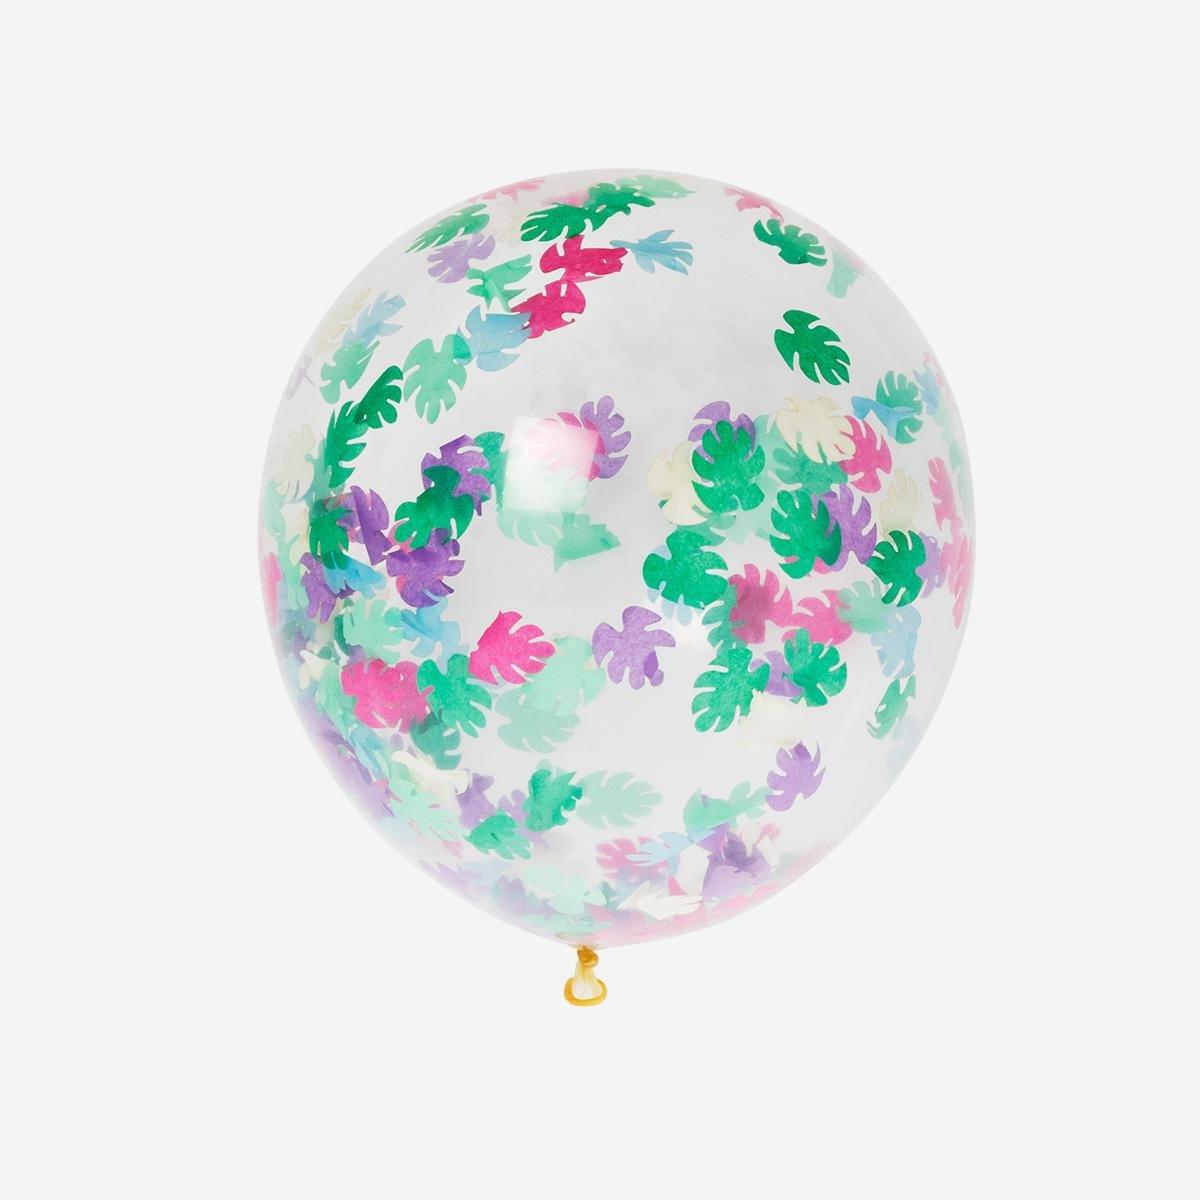 Multicolour balloons with confetti. 6 pcs